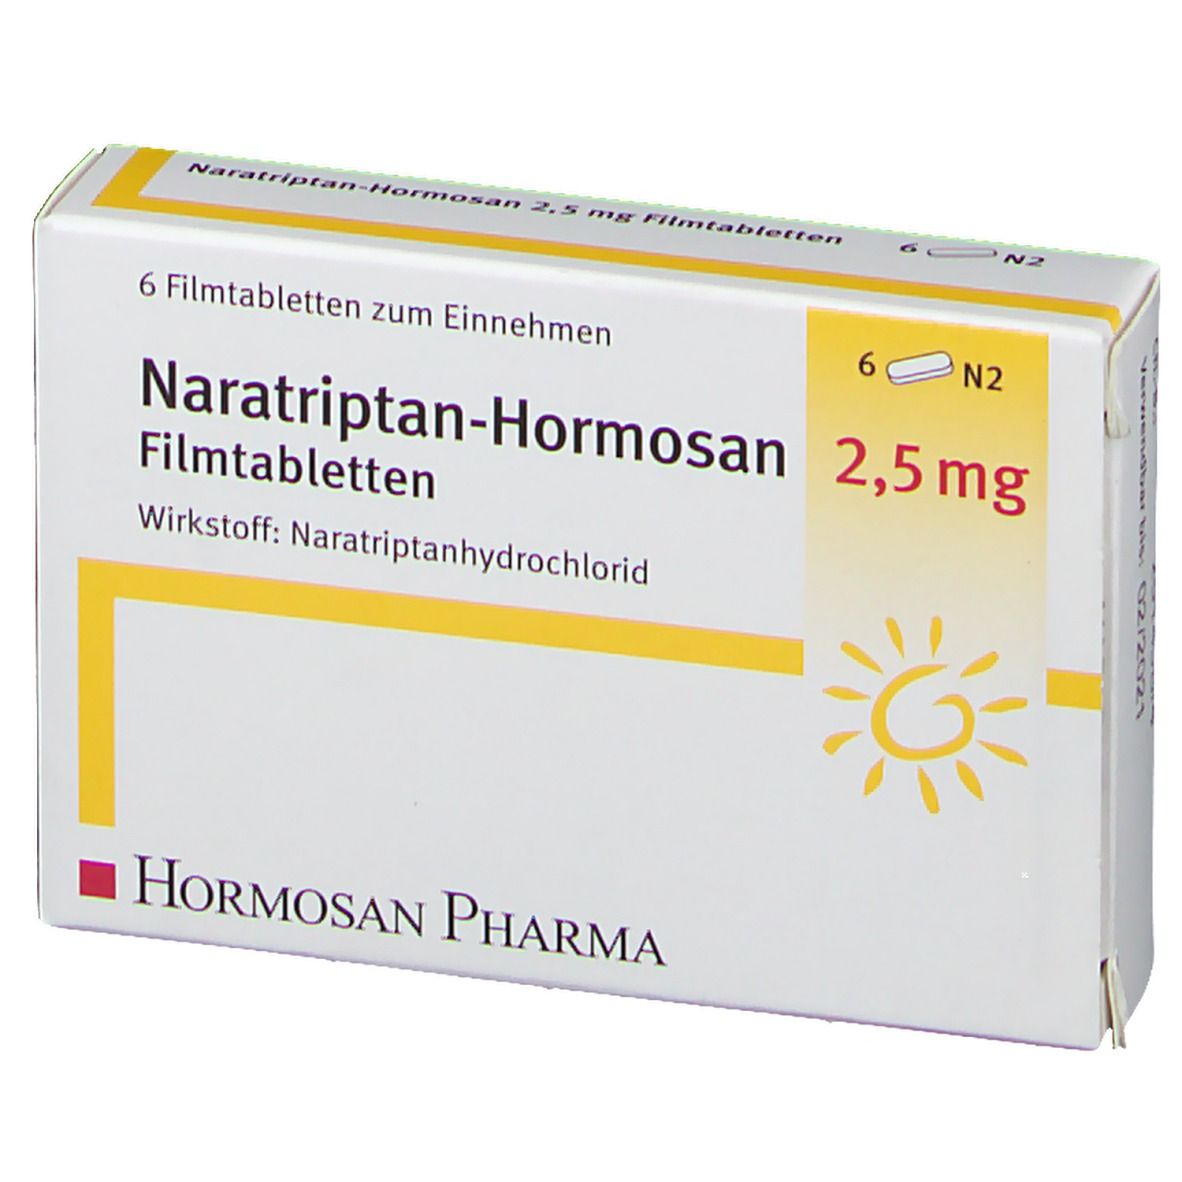 Naratriptan-Hormosan 2,5 mg